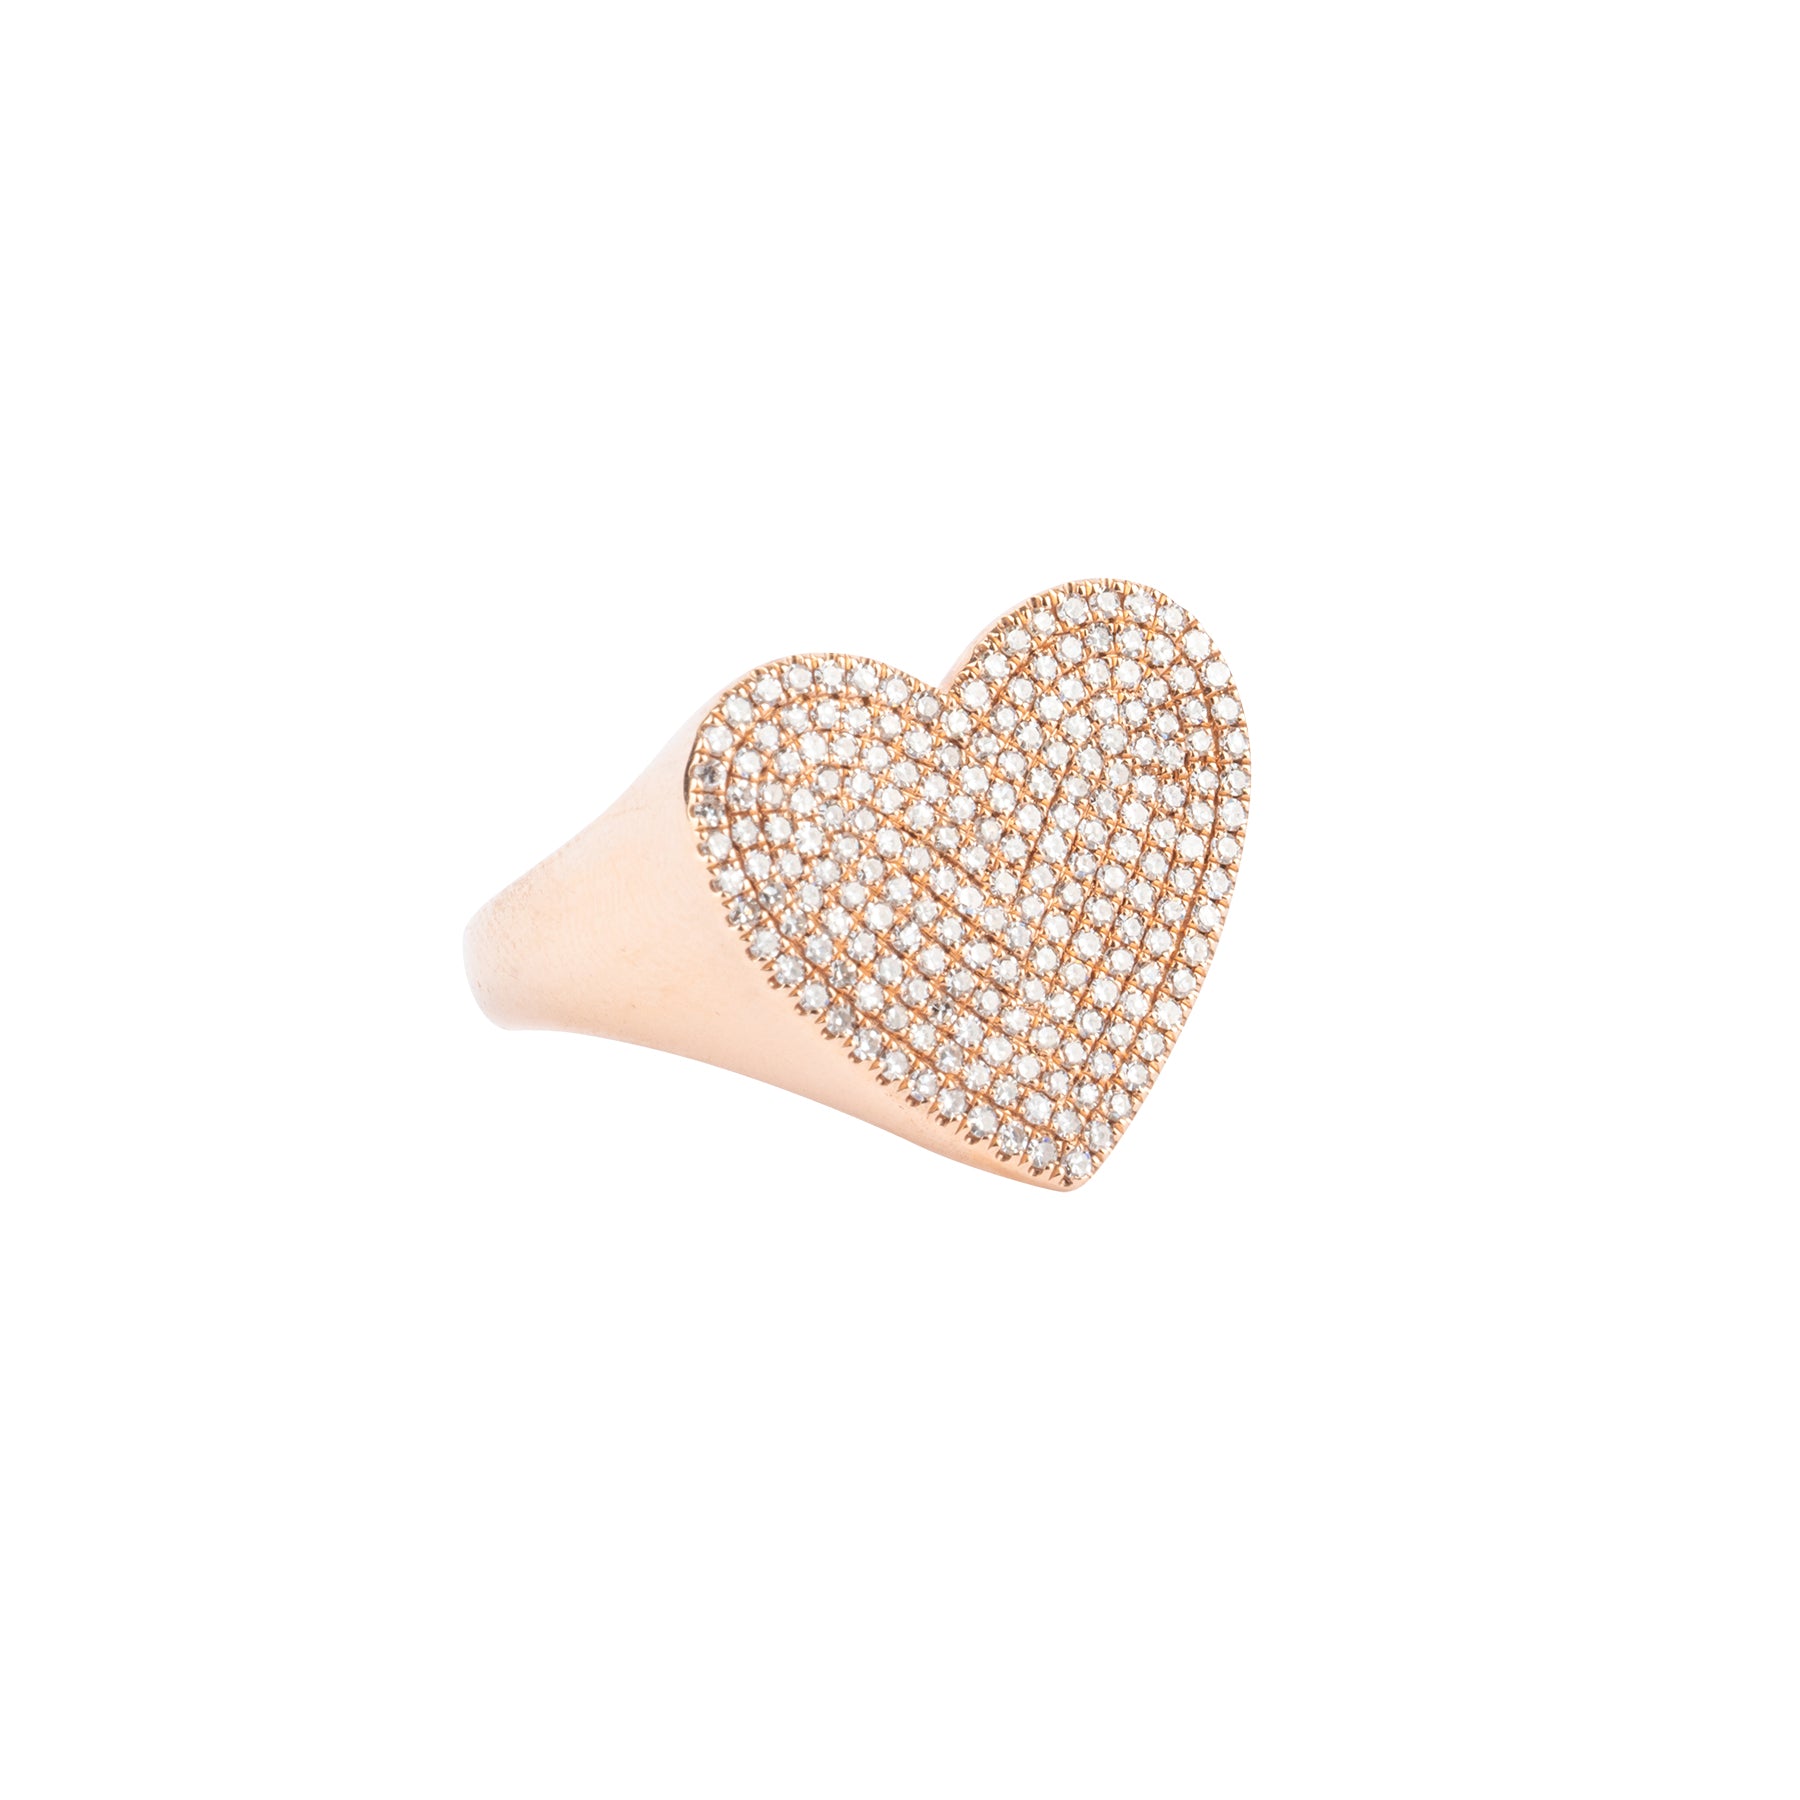 Big Heart Pave Diamond Signet Ring - Nina Segal Jewelry